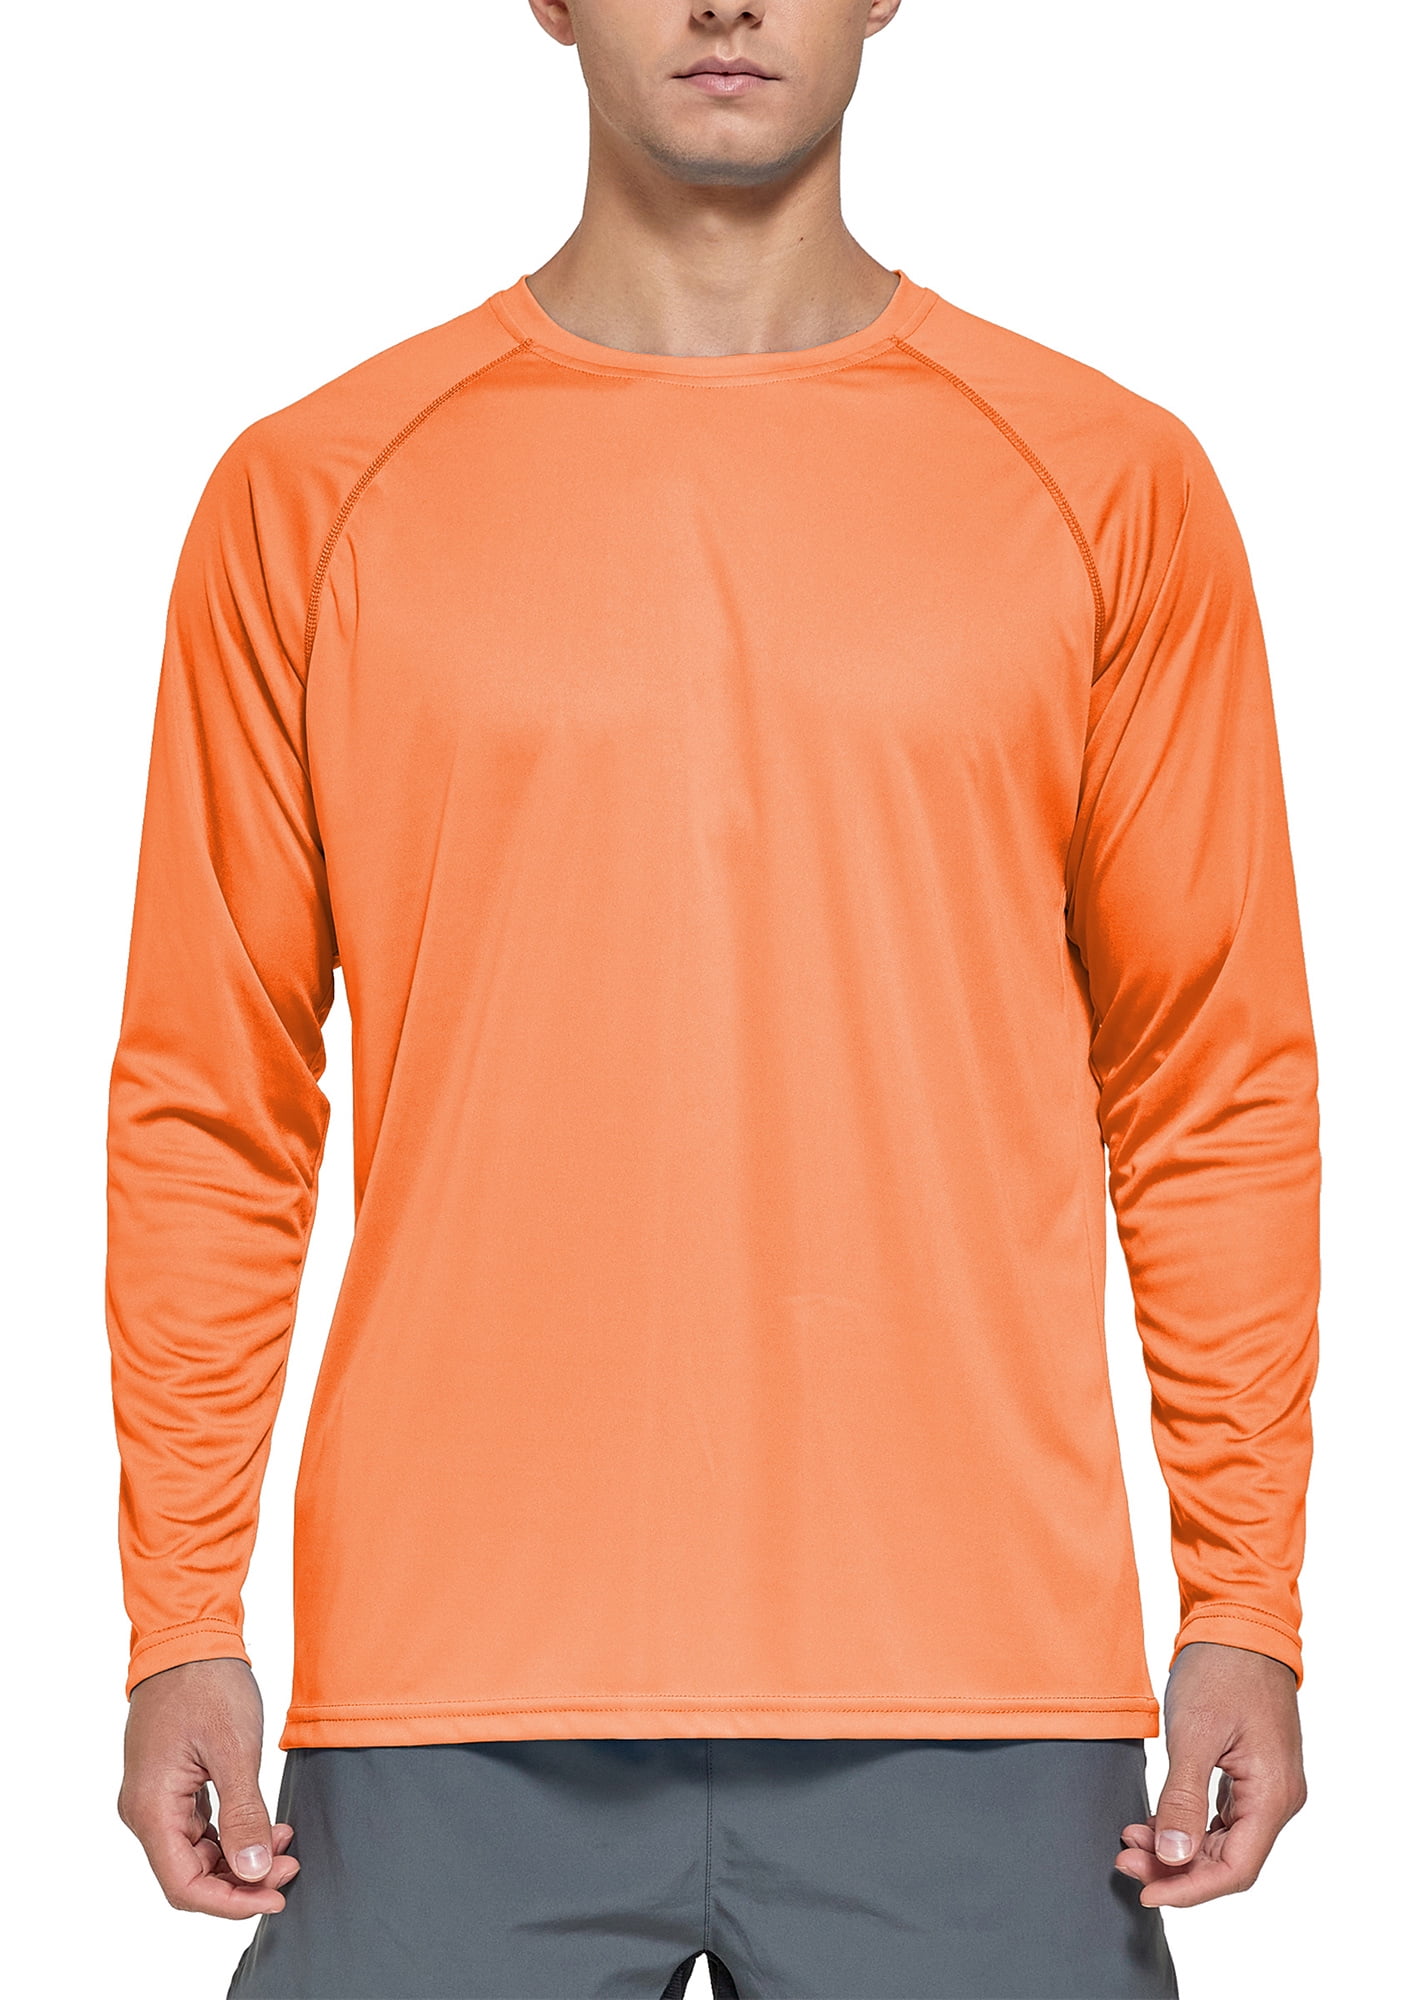 FEDTOSING Men's UPF 50+ Long Sleeve Shirts Sun Protection SPF/UV Fishing  Hiking T-Shirts Orange 